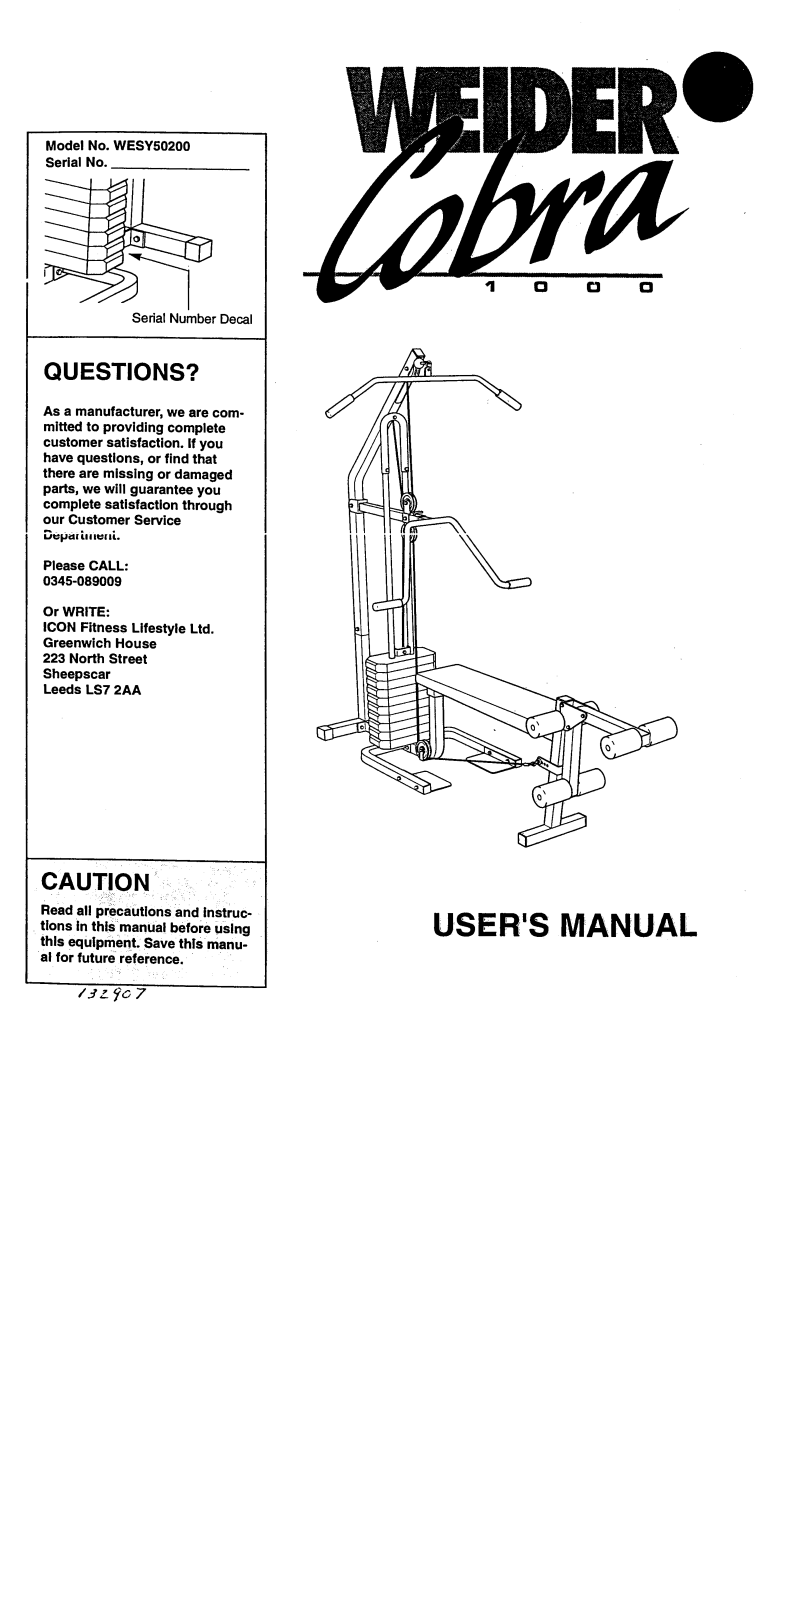 Weider COBRA 1000 User Manual